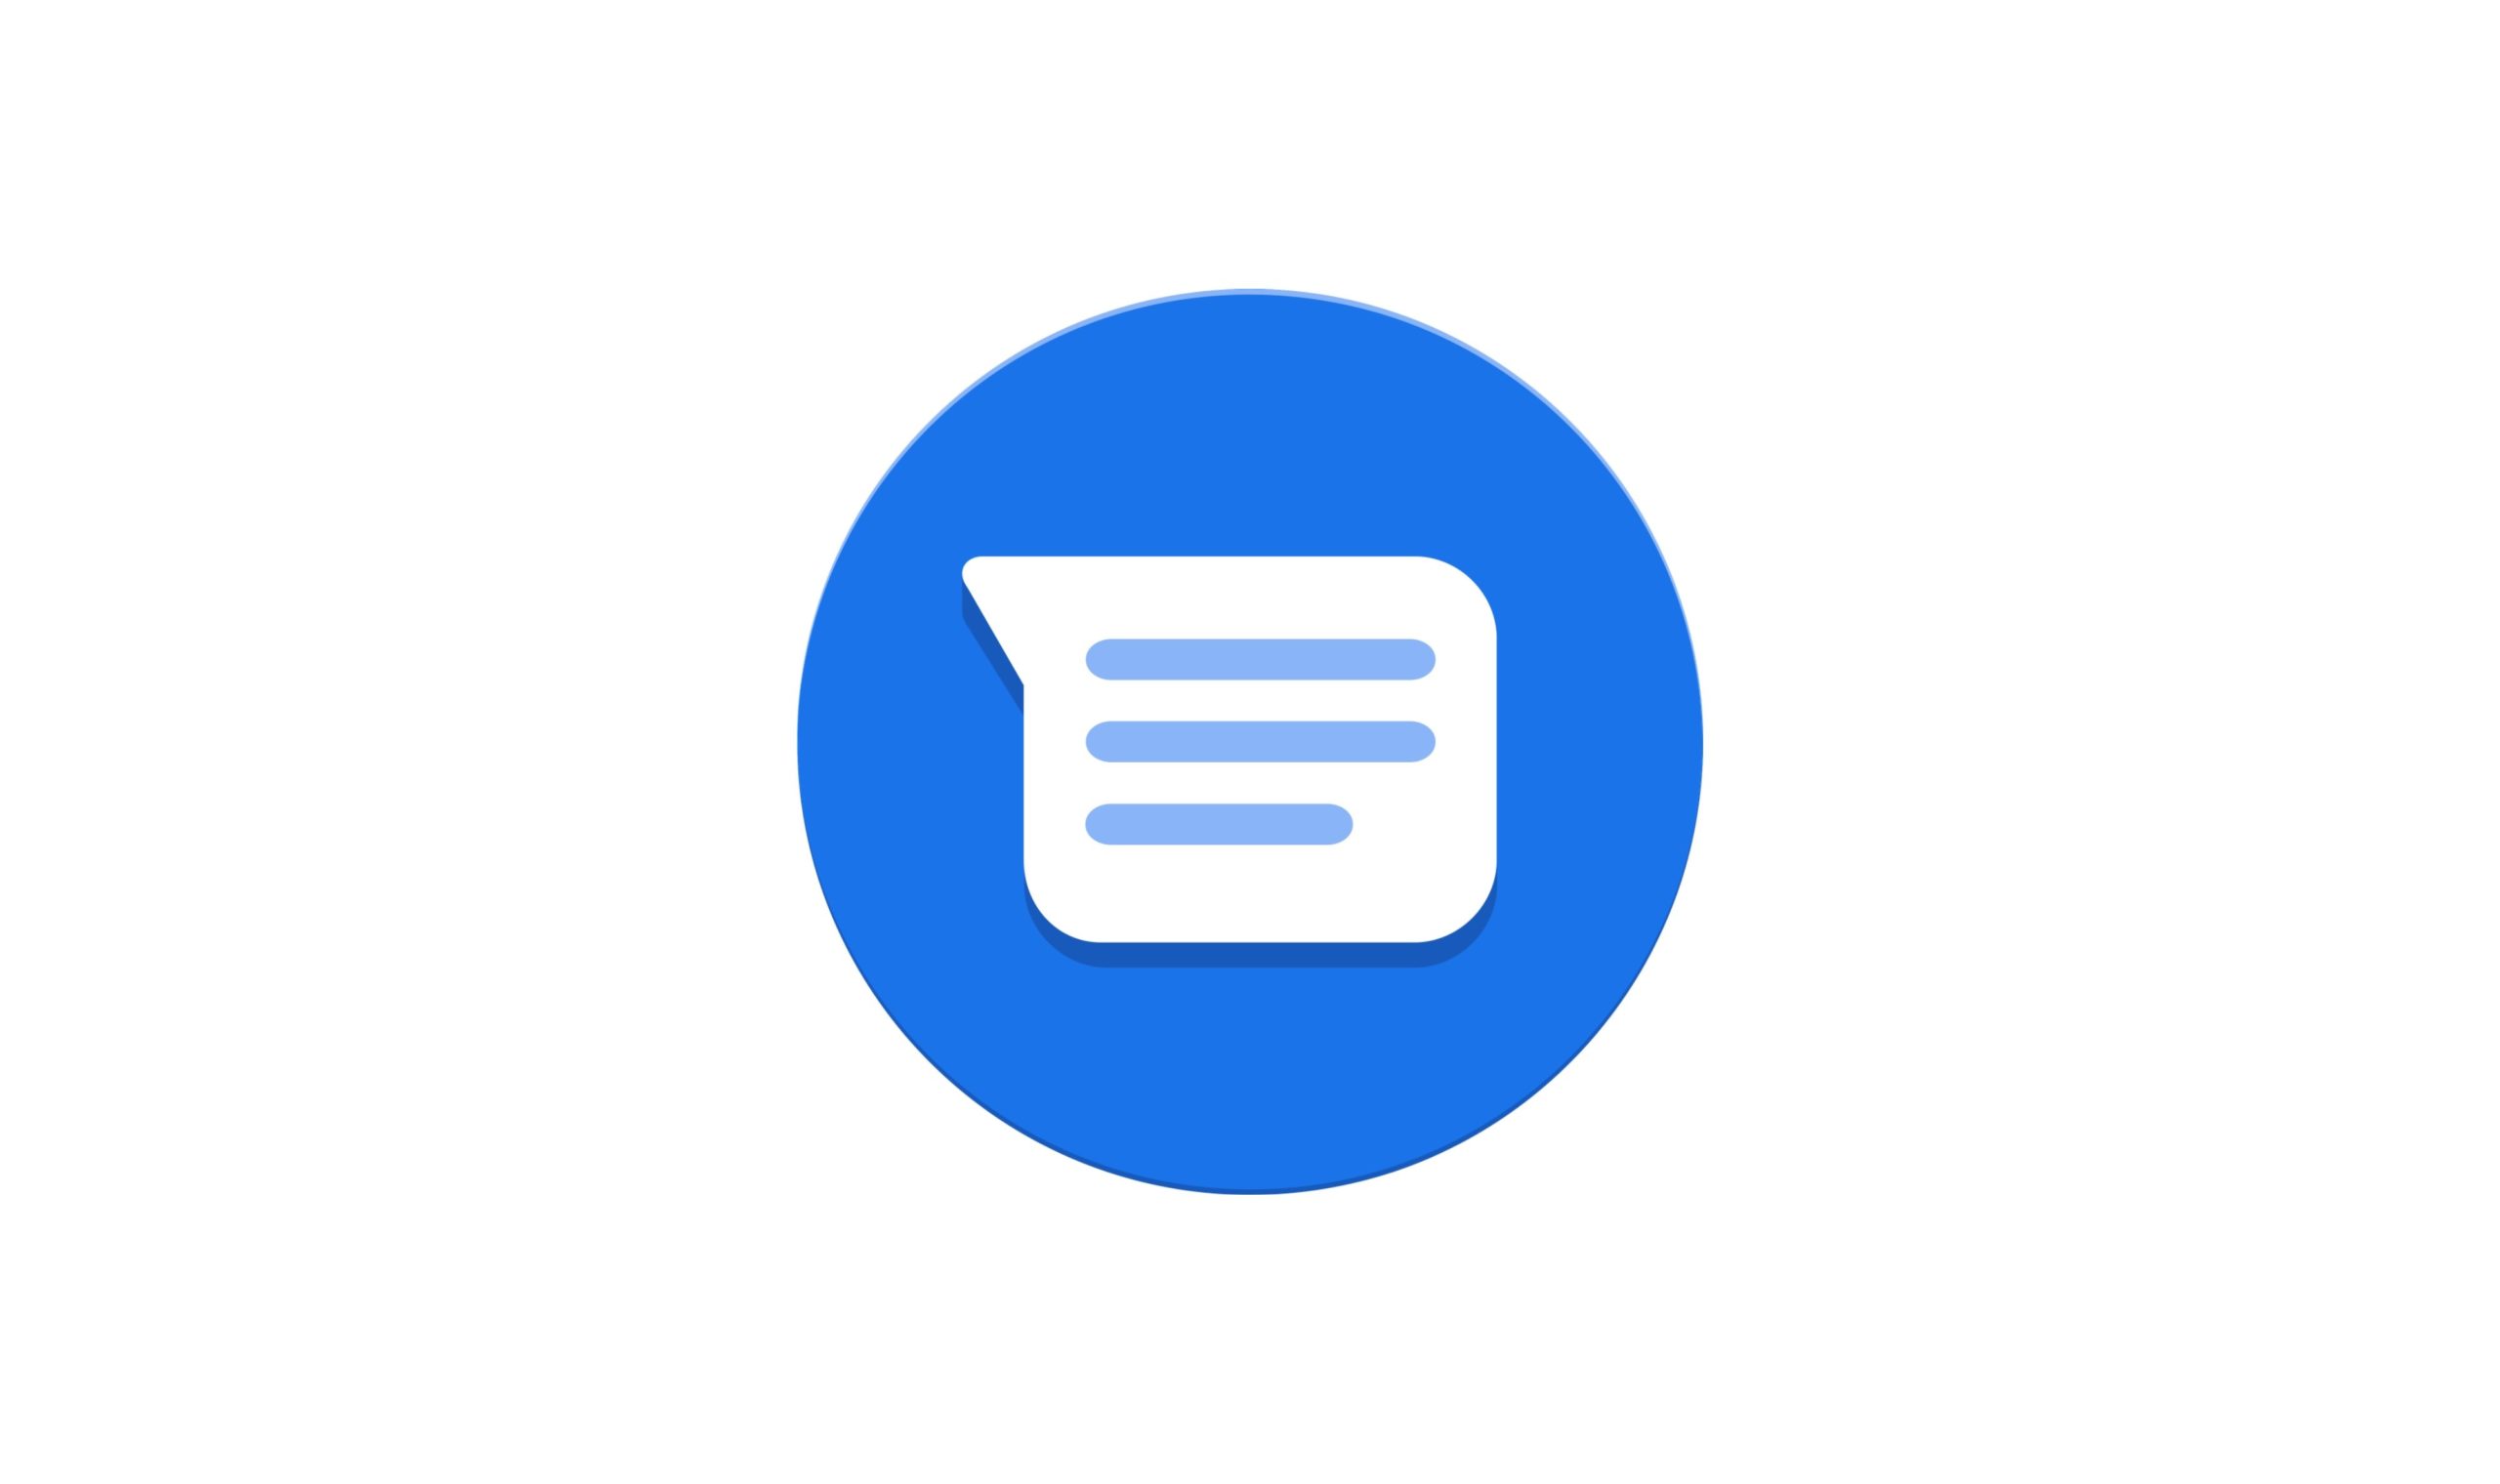 Google Messages app logo